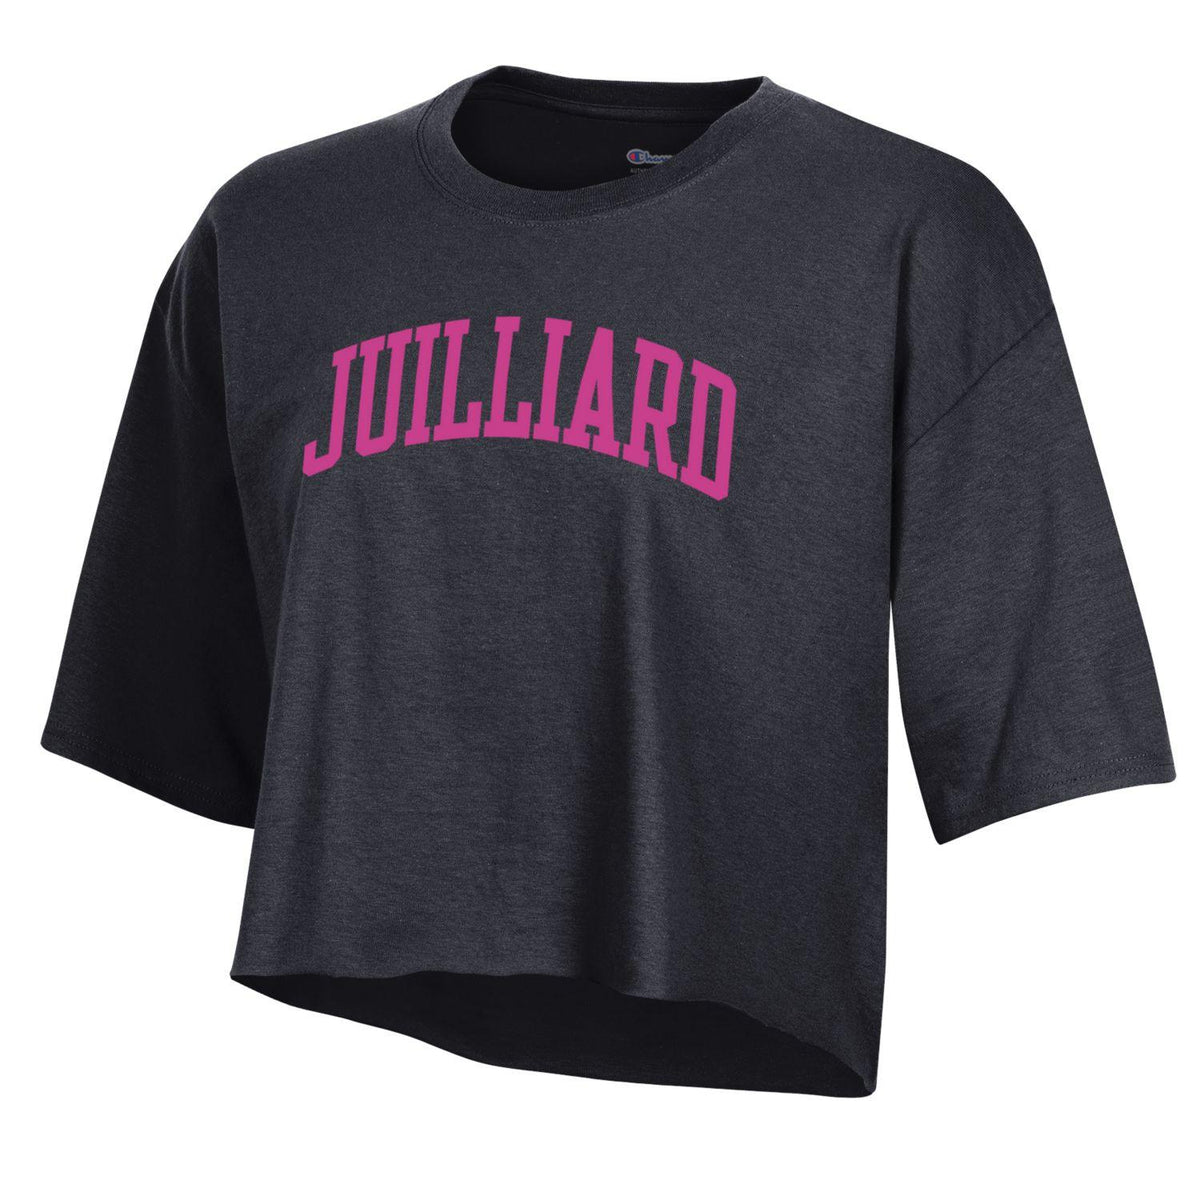 T-Shirt: Champion Crop top with Juilliard Collegiate